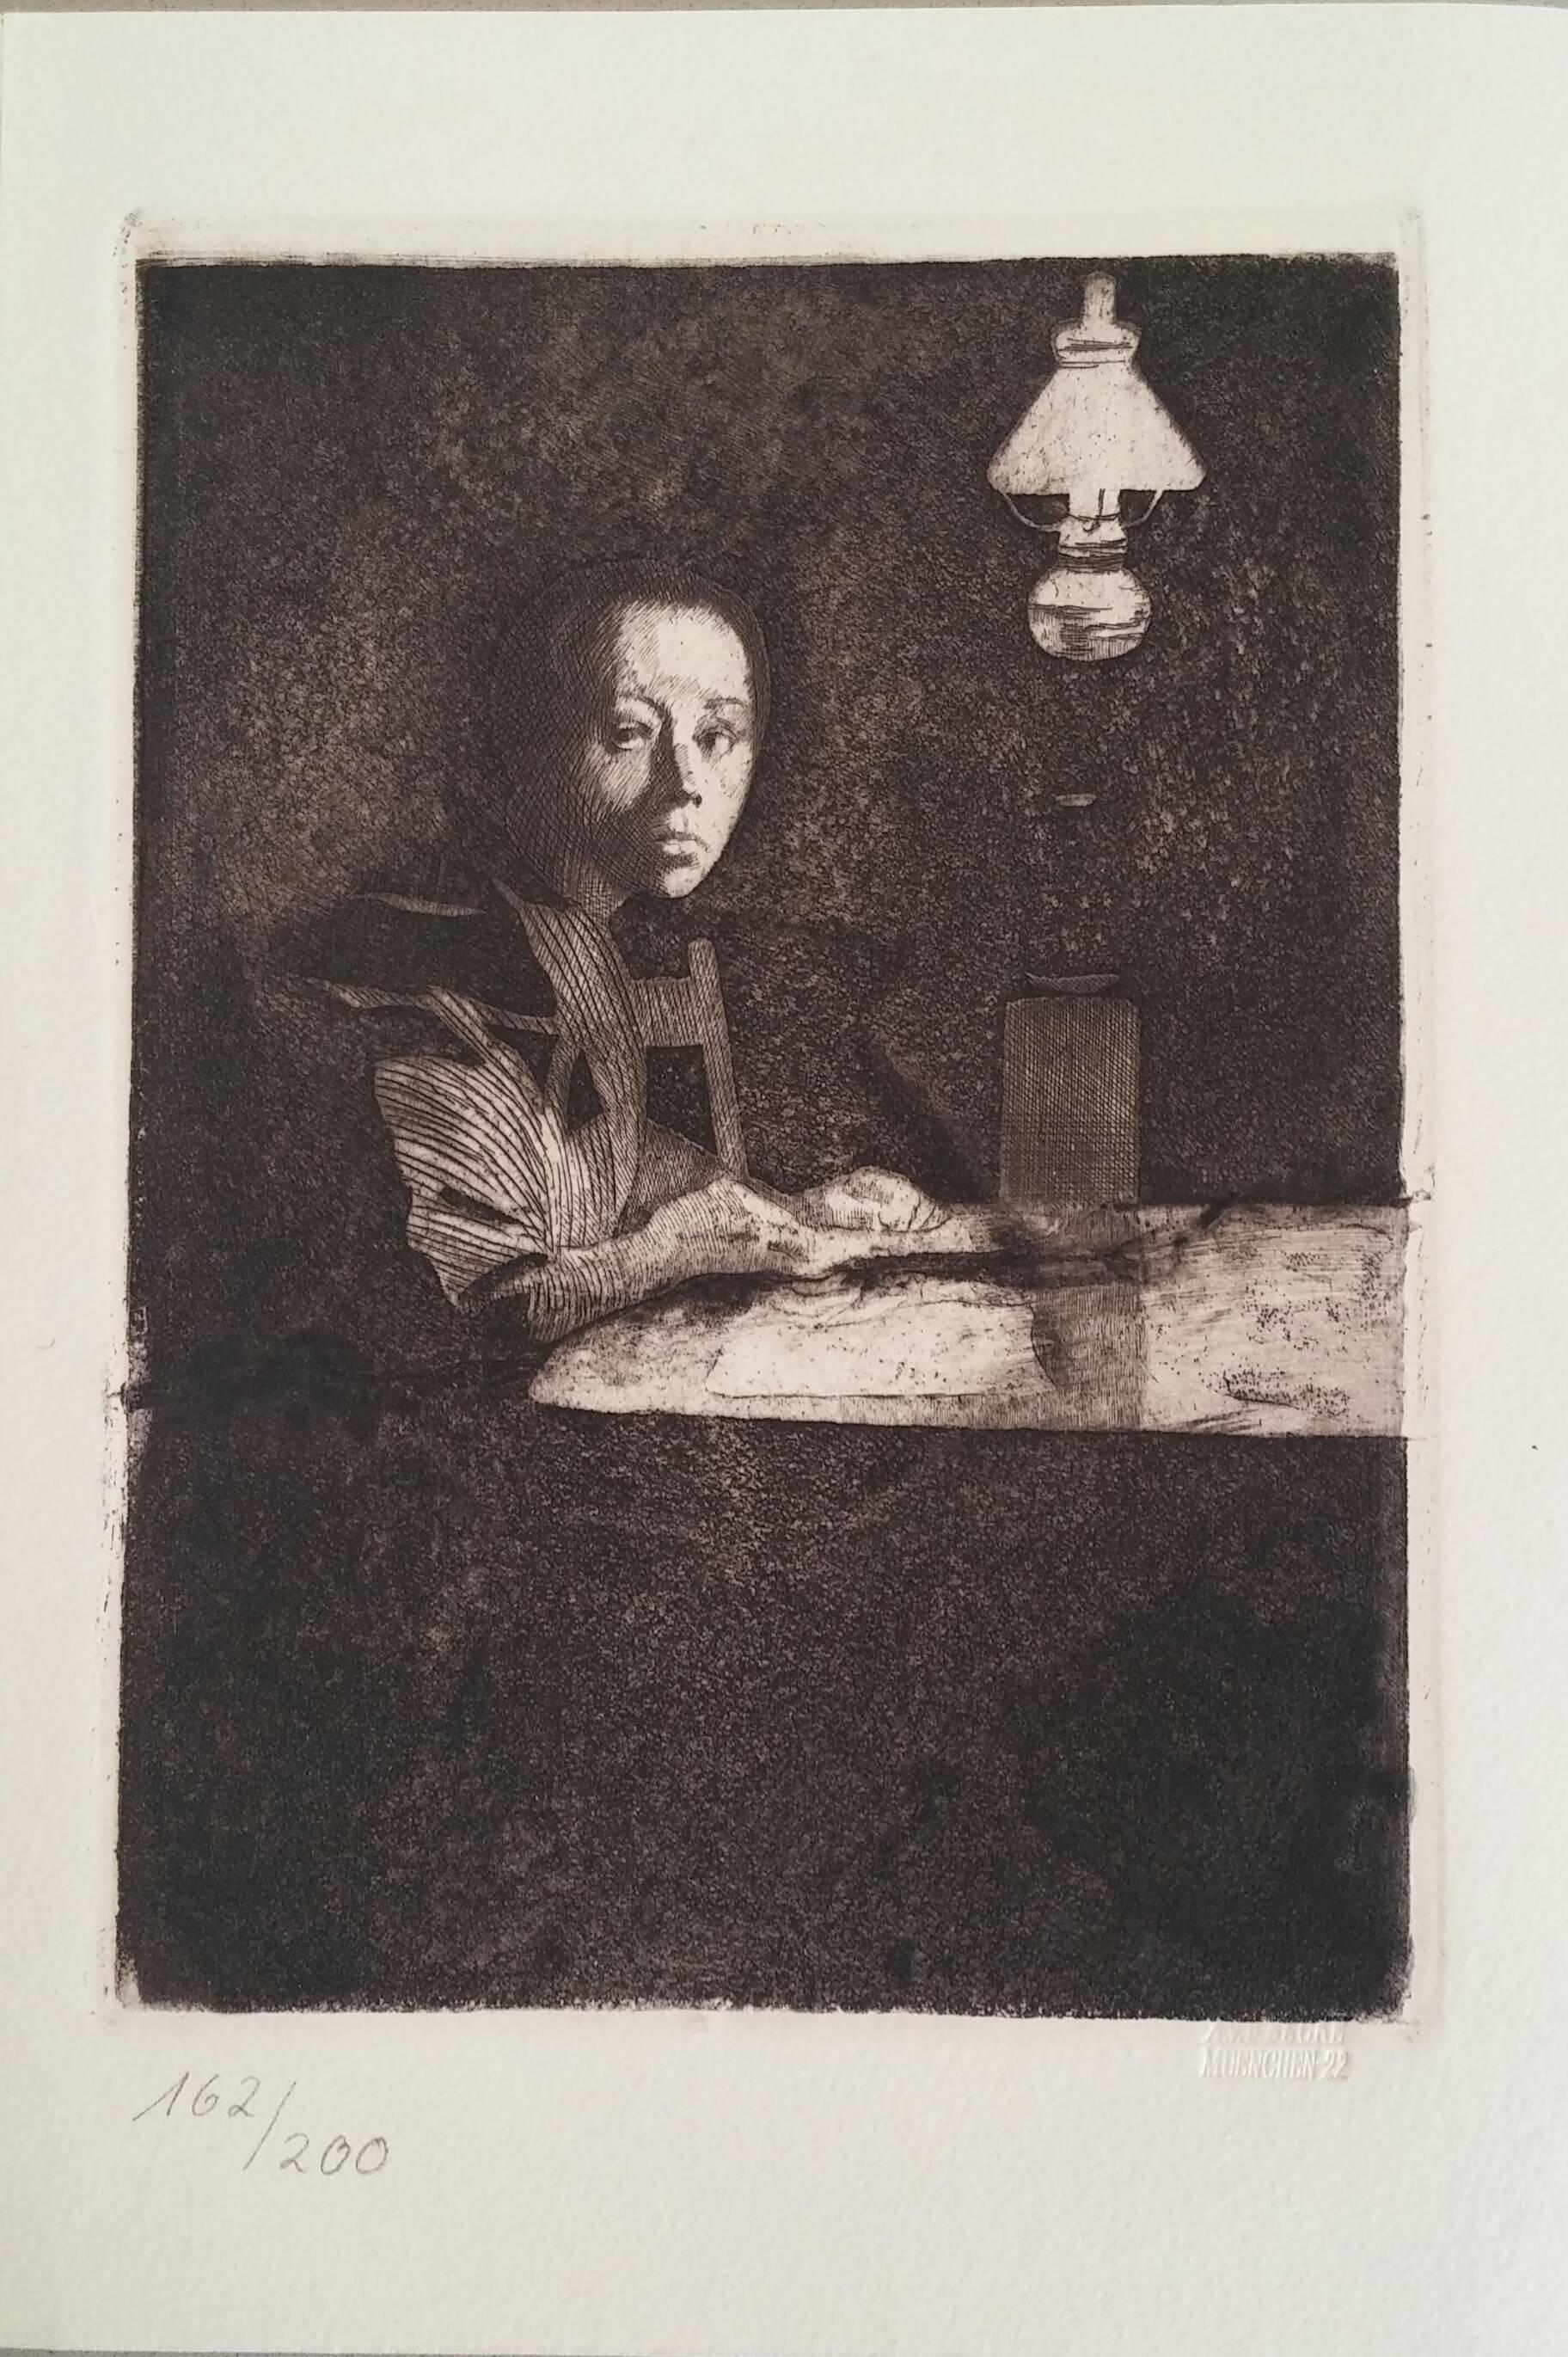 Käthe Kollwitz Figurative Print - "Selbstbildnis am Tisch II. Fassung" ("Selfportrait by the table")